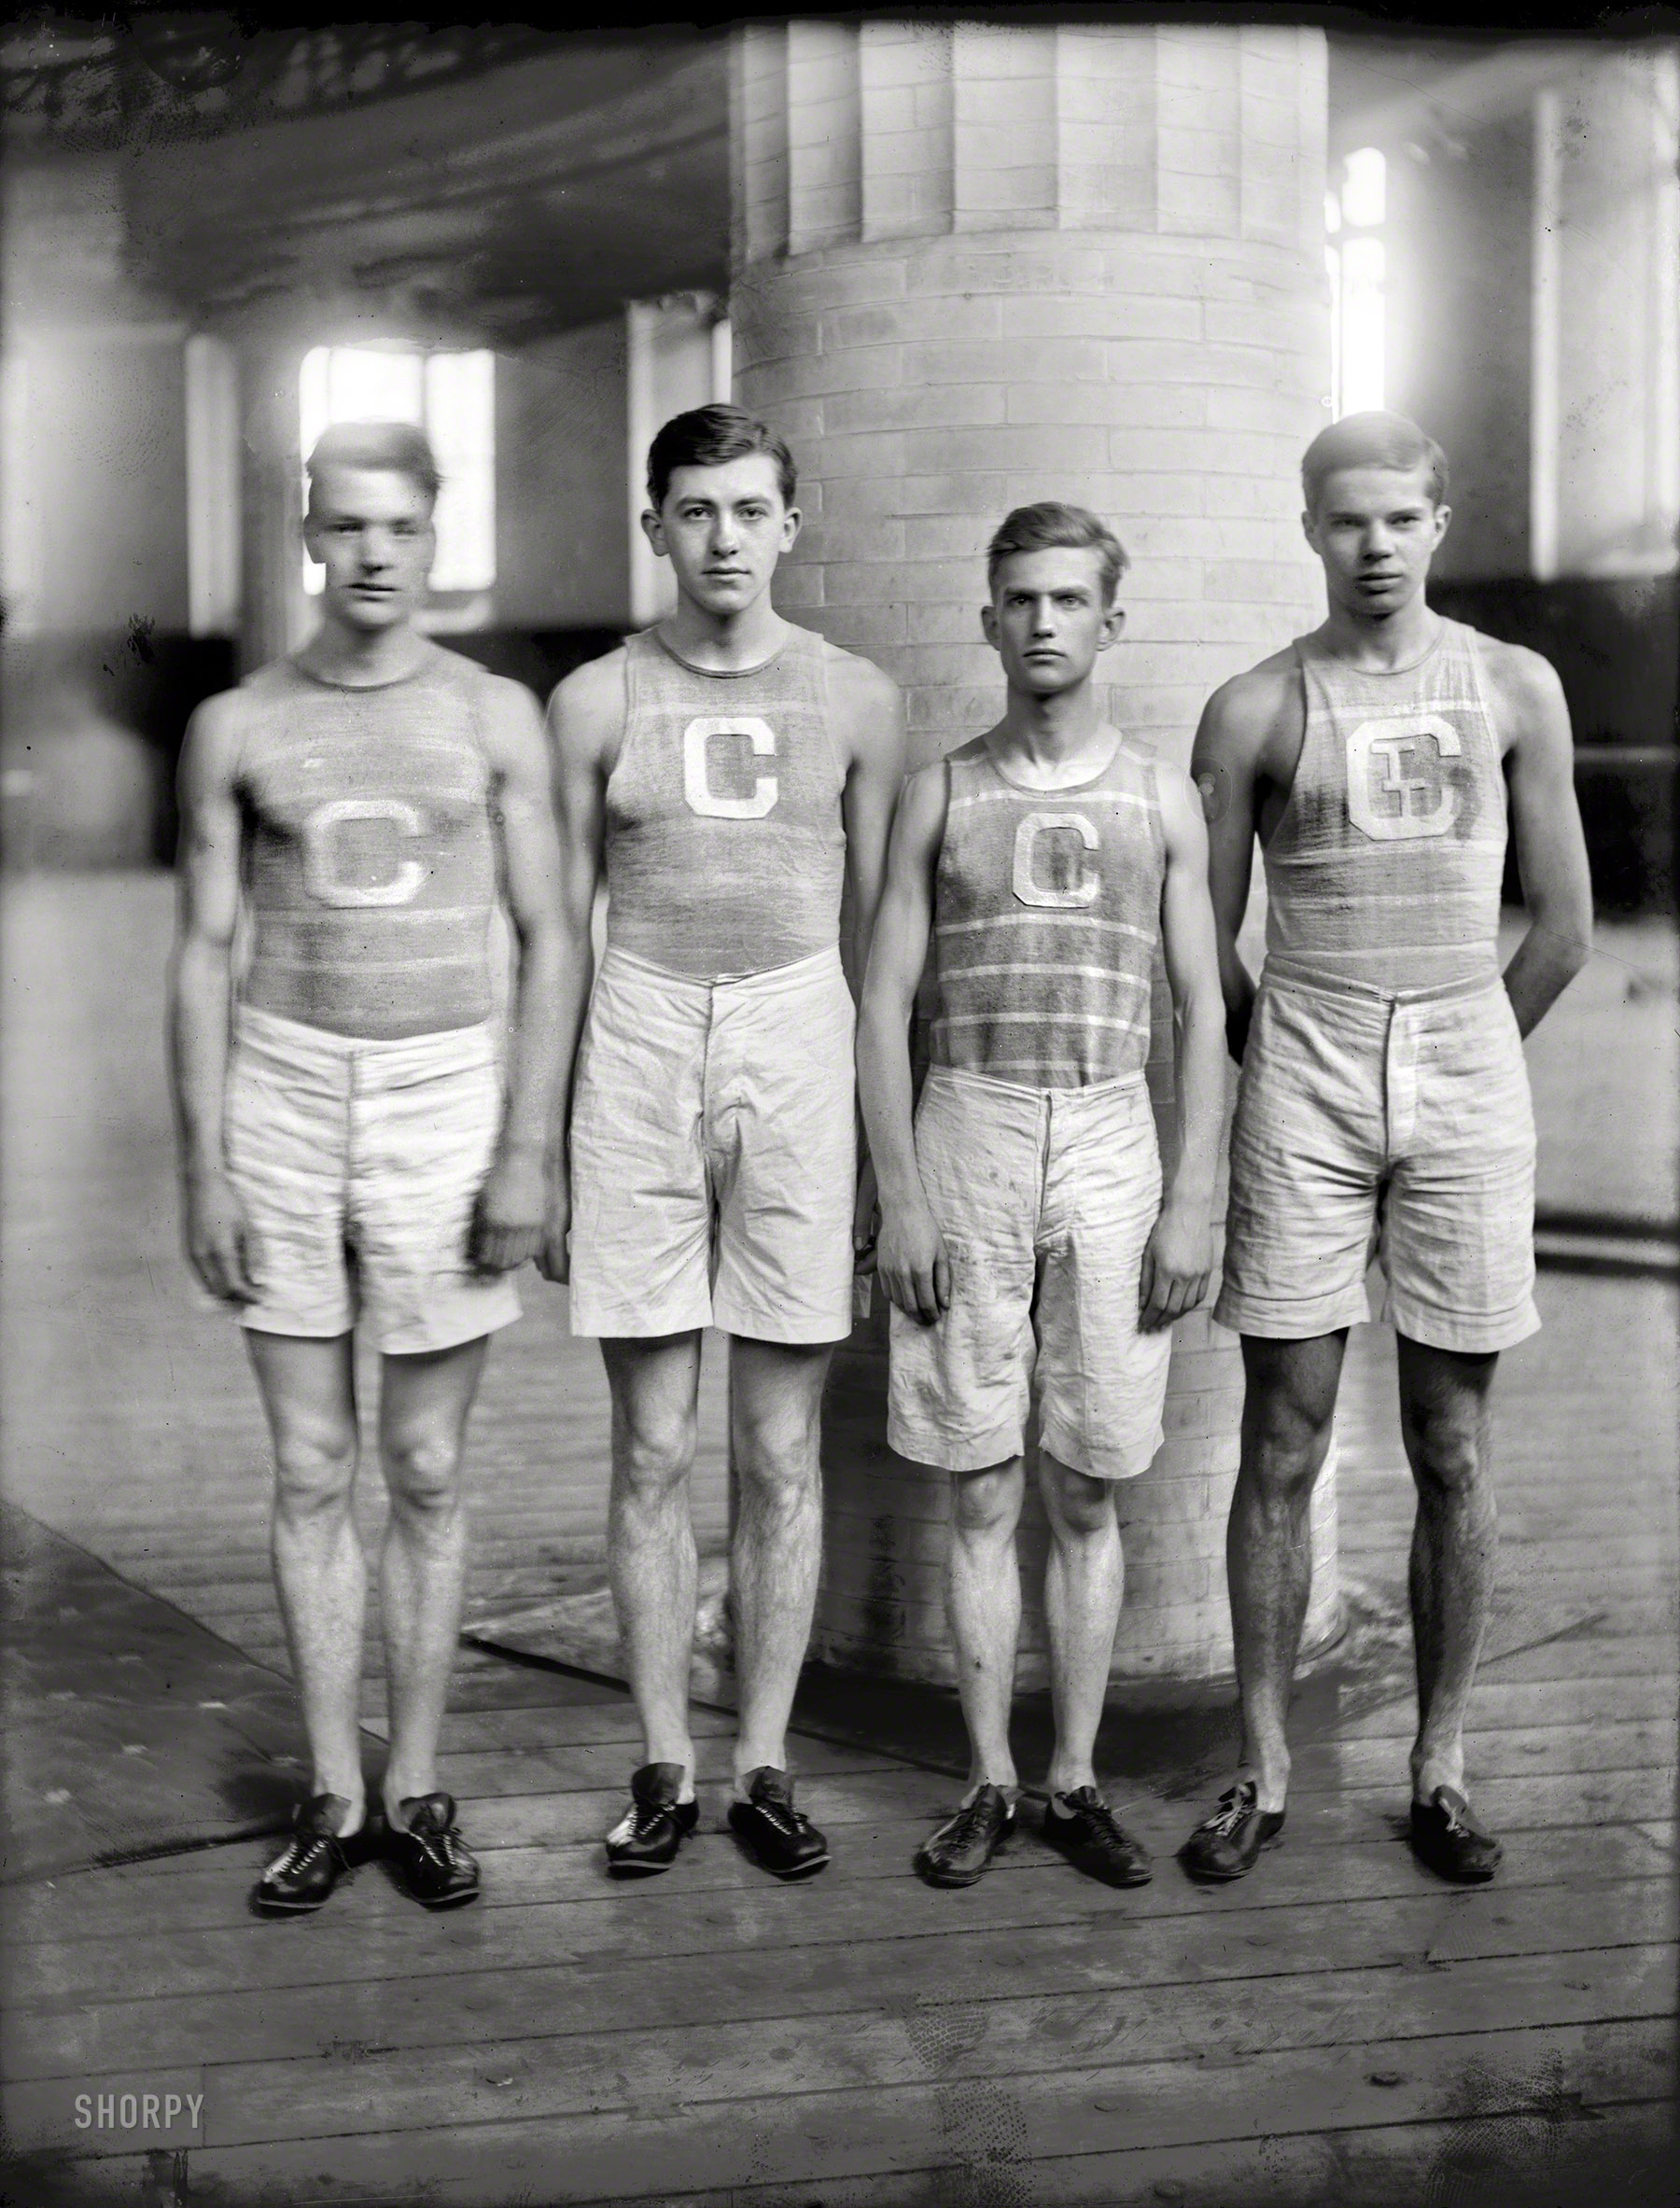 New York. "Columbia Relay Team, 1908. Capt. A. Zink, G.W. Hoyns, B. Sanders, K.M. Boorman." 8x10 glass negative, Bain News Service. View full size.